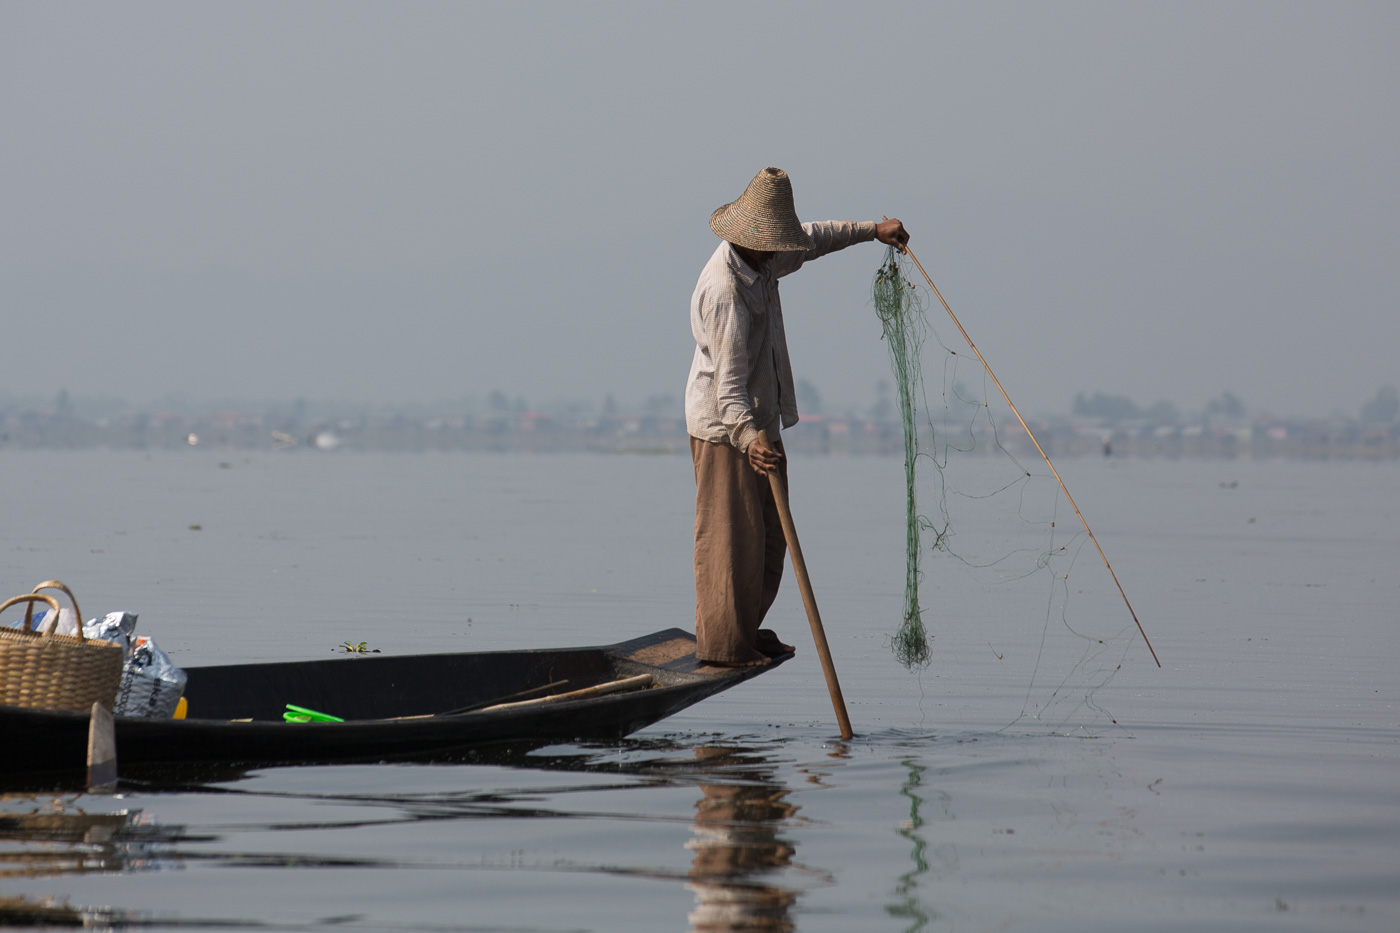 Exploring Inle Lake in Myanmar